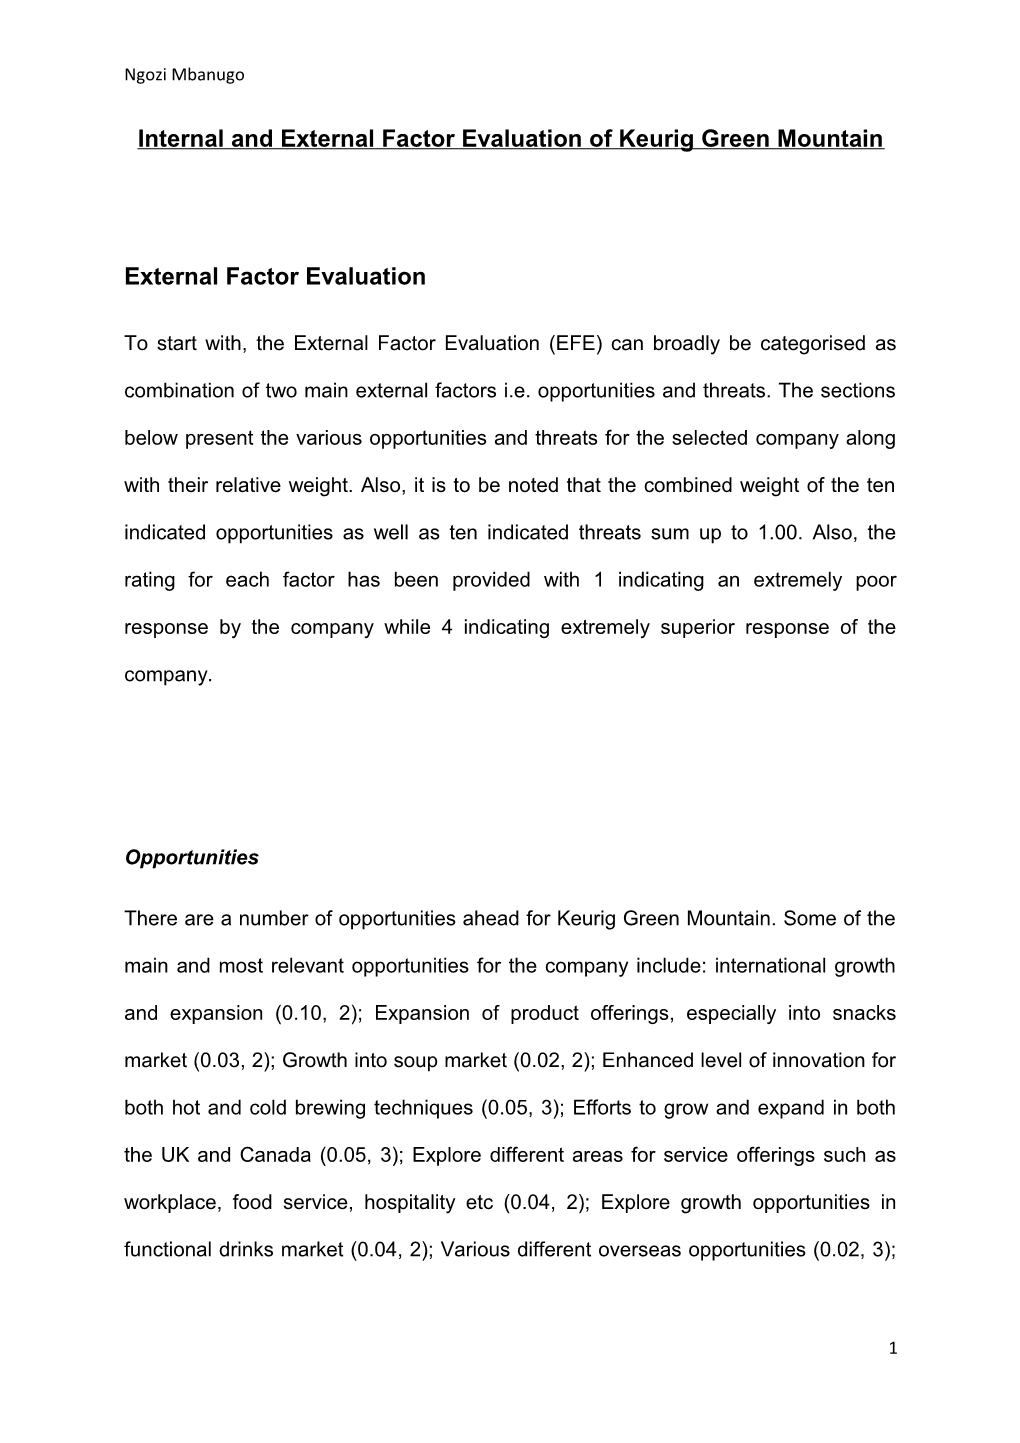 Internal and External Factor Evaluation of Keurig Green Mountain